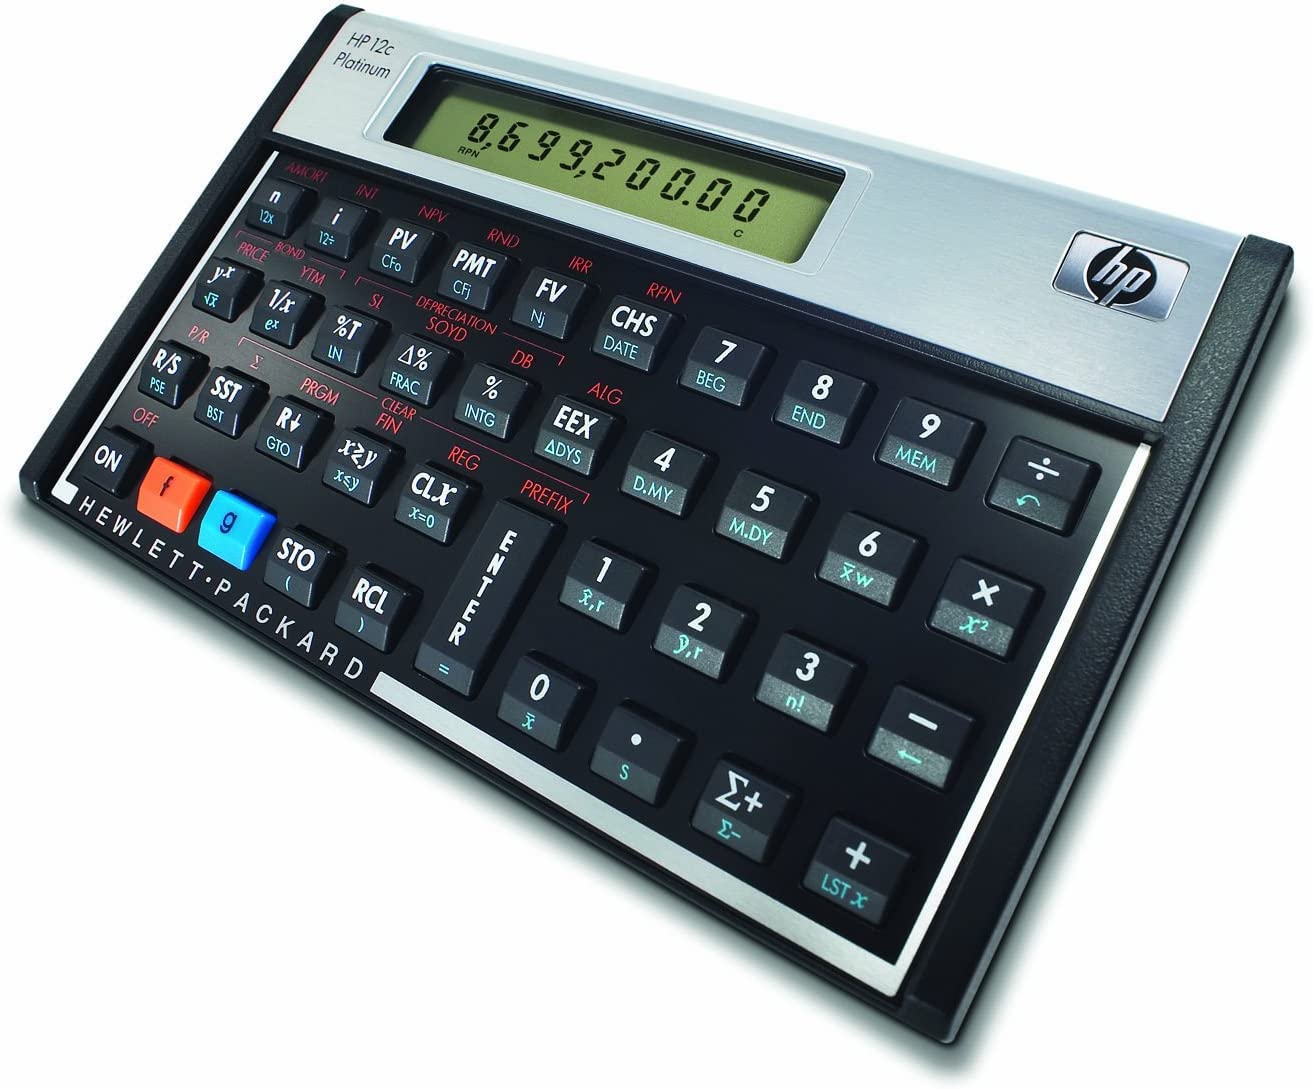 HP 12c Platinum Financial Calculator, 10-Digit LCD